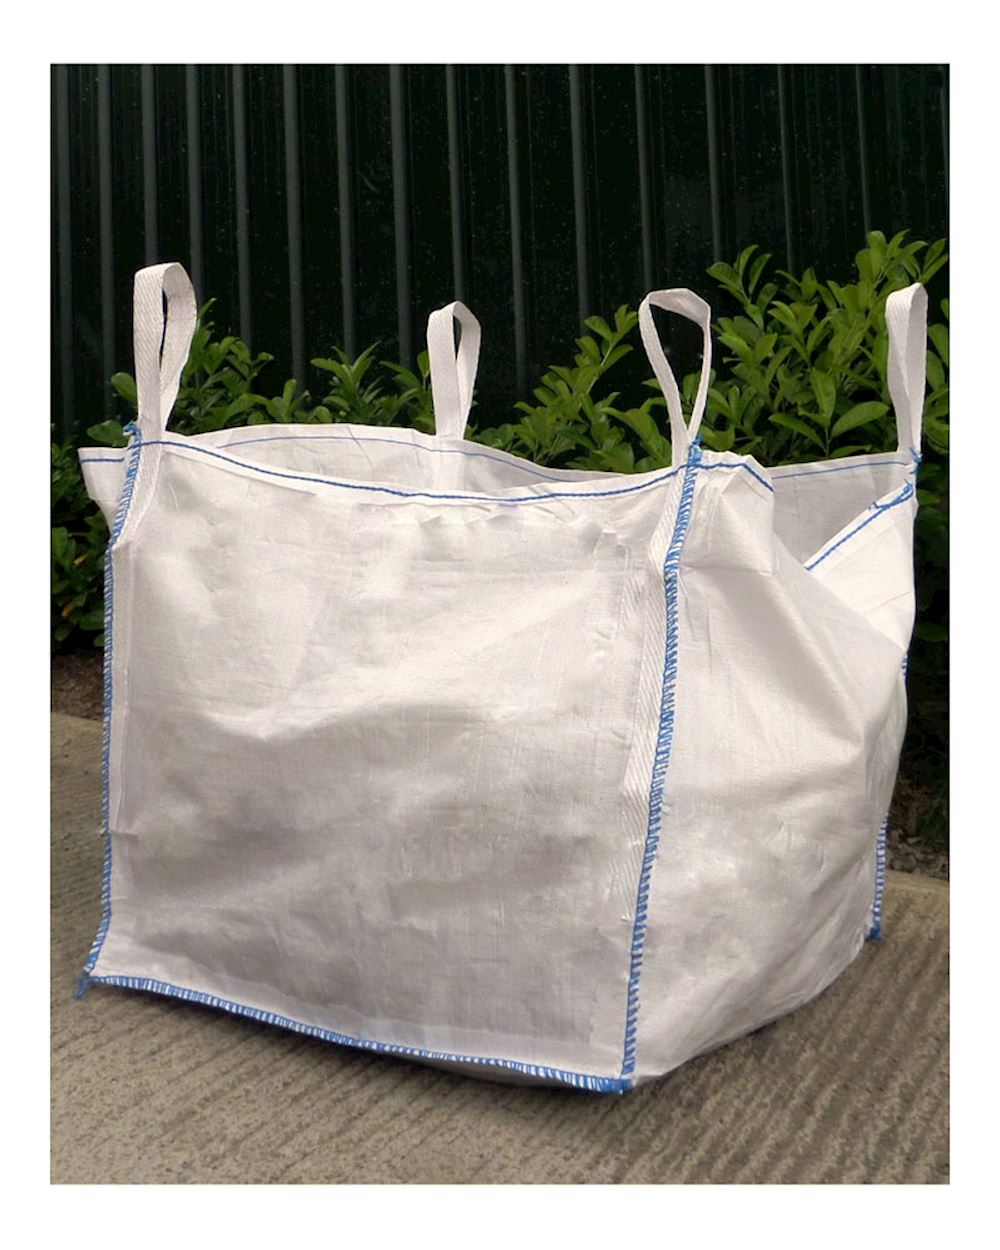 UN FIBC Jumbo ton Bags by ABIX International, Made in India